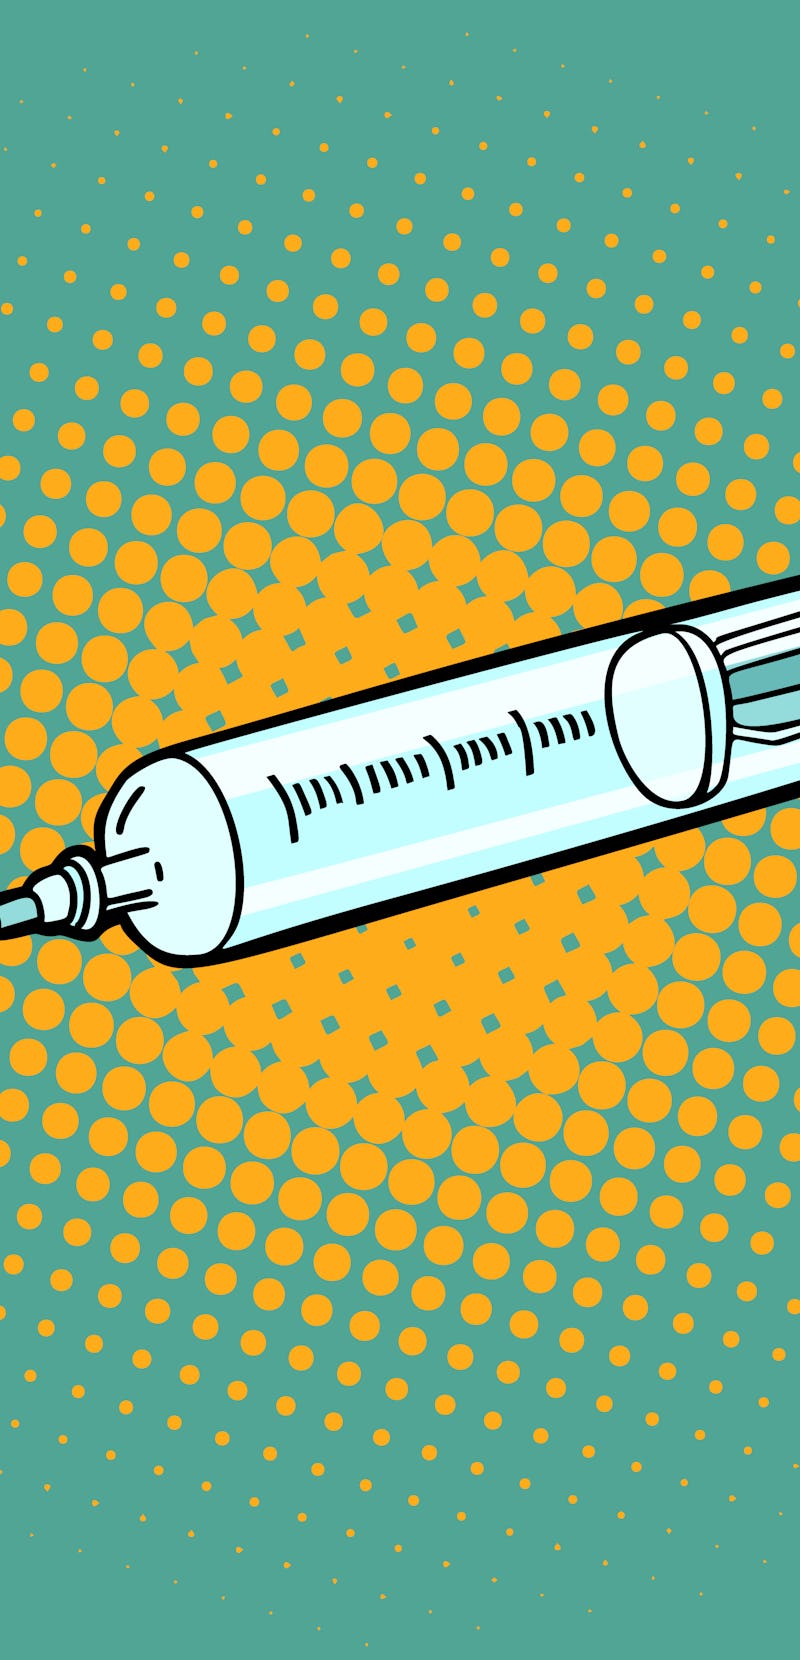 syringe medical instrument. Comic cartoon pop art retro vector illustration drawing